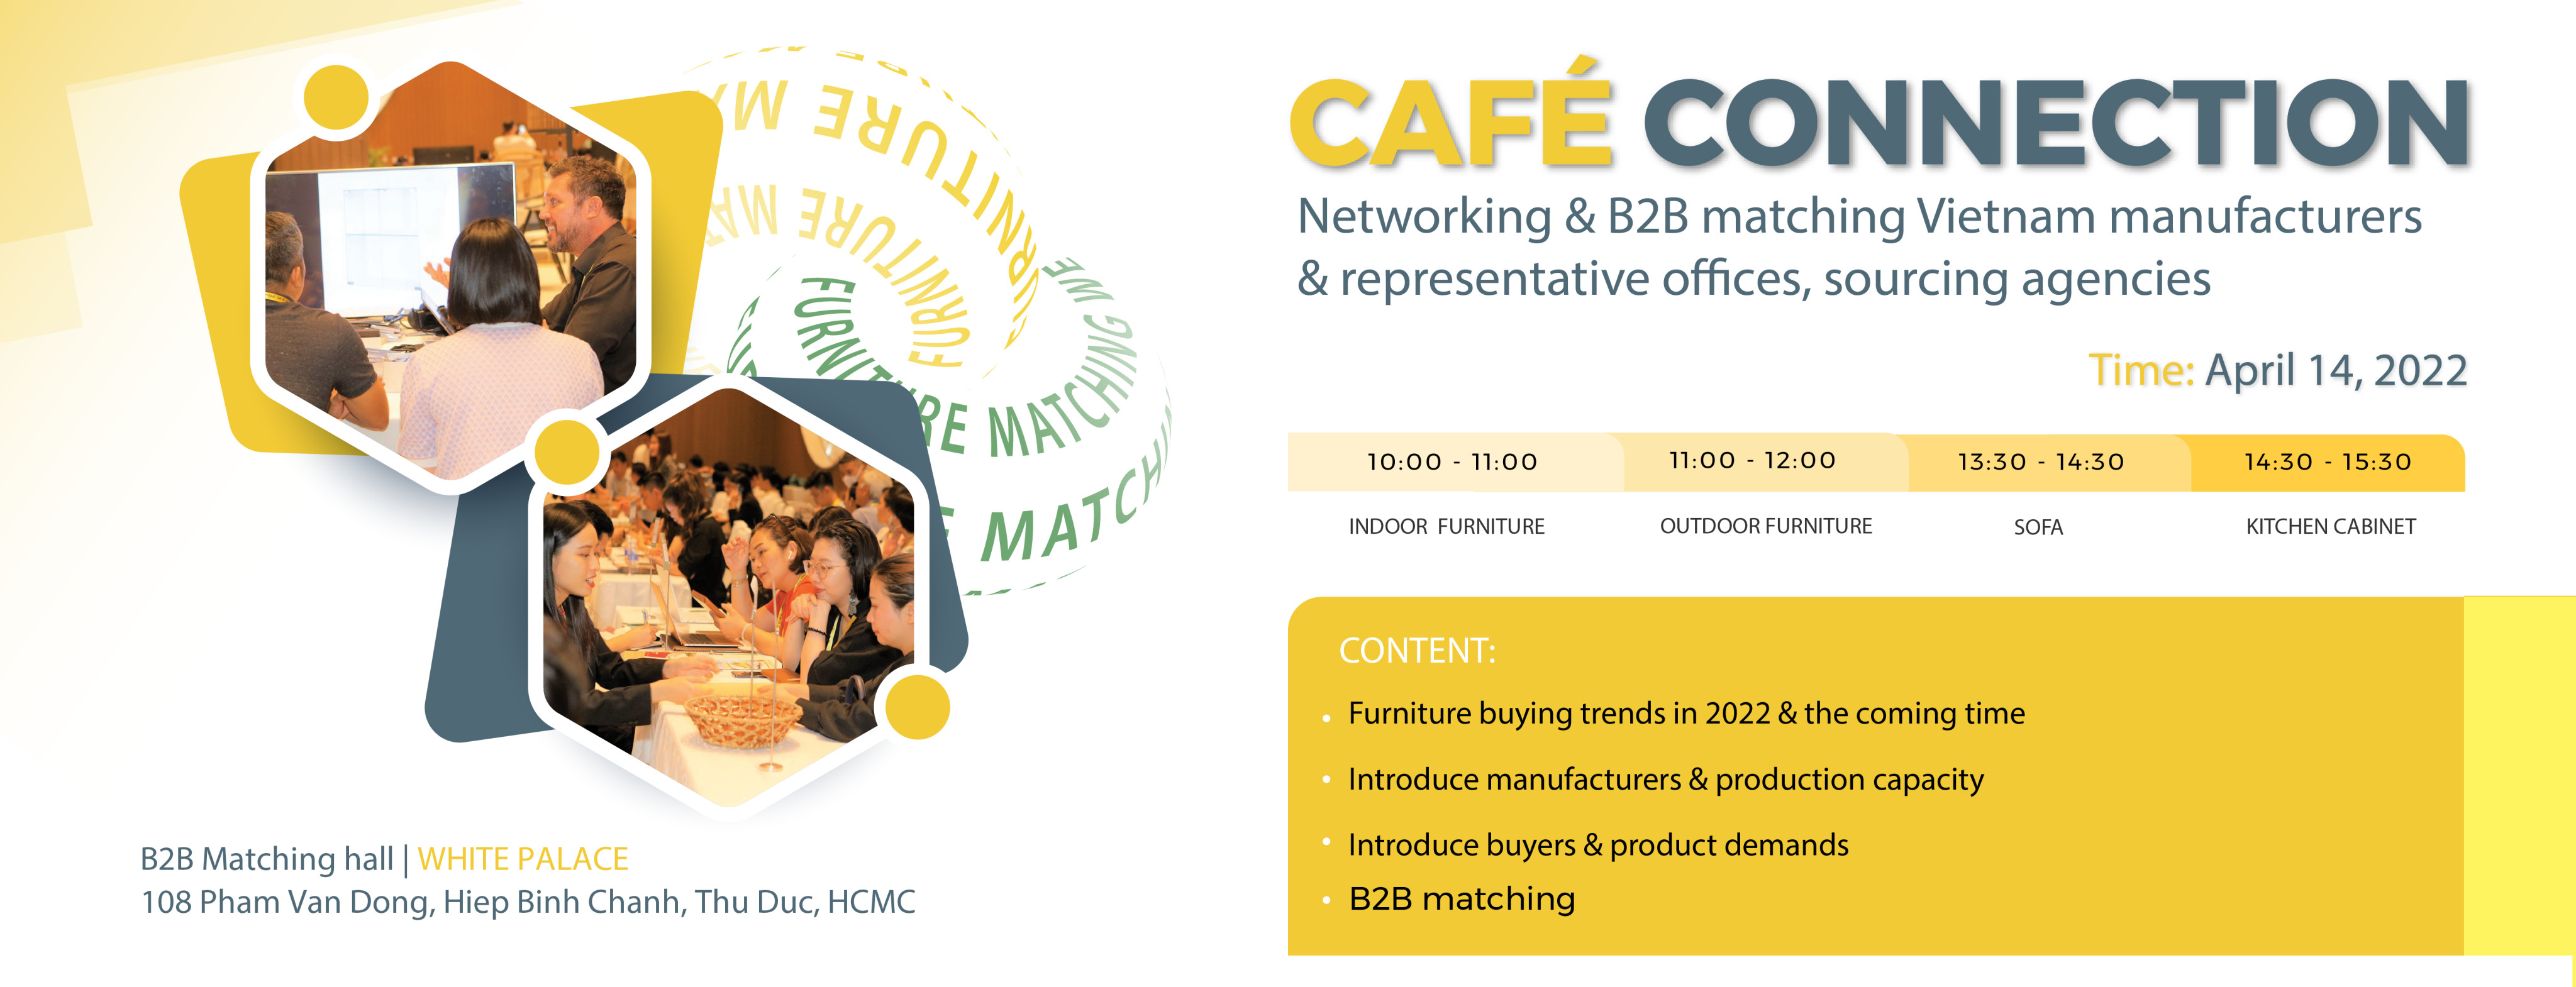 VFMW 2022 - "CAFÉ CONNECTION"